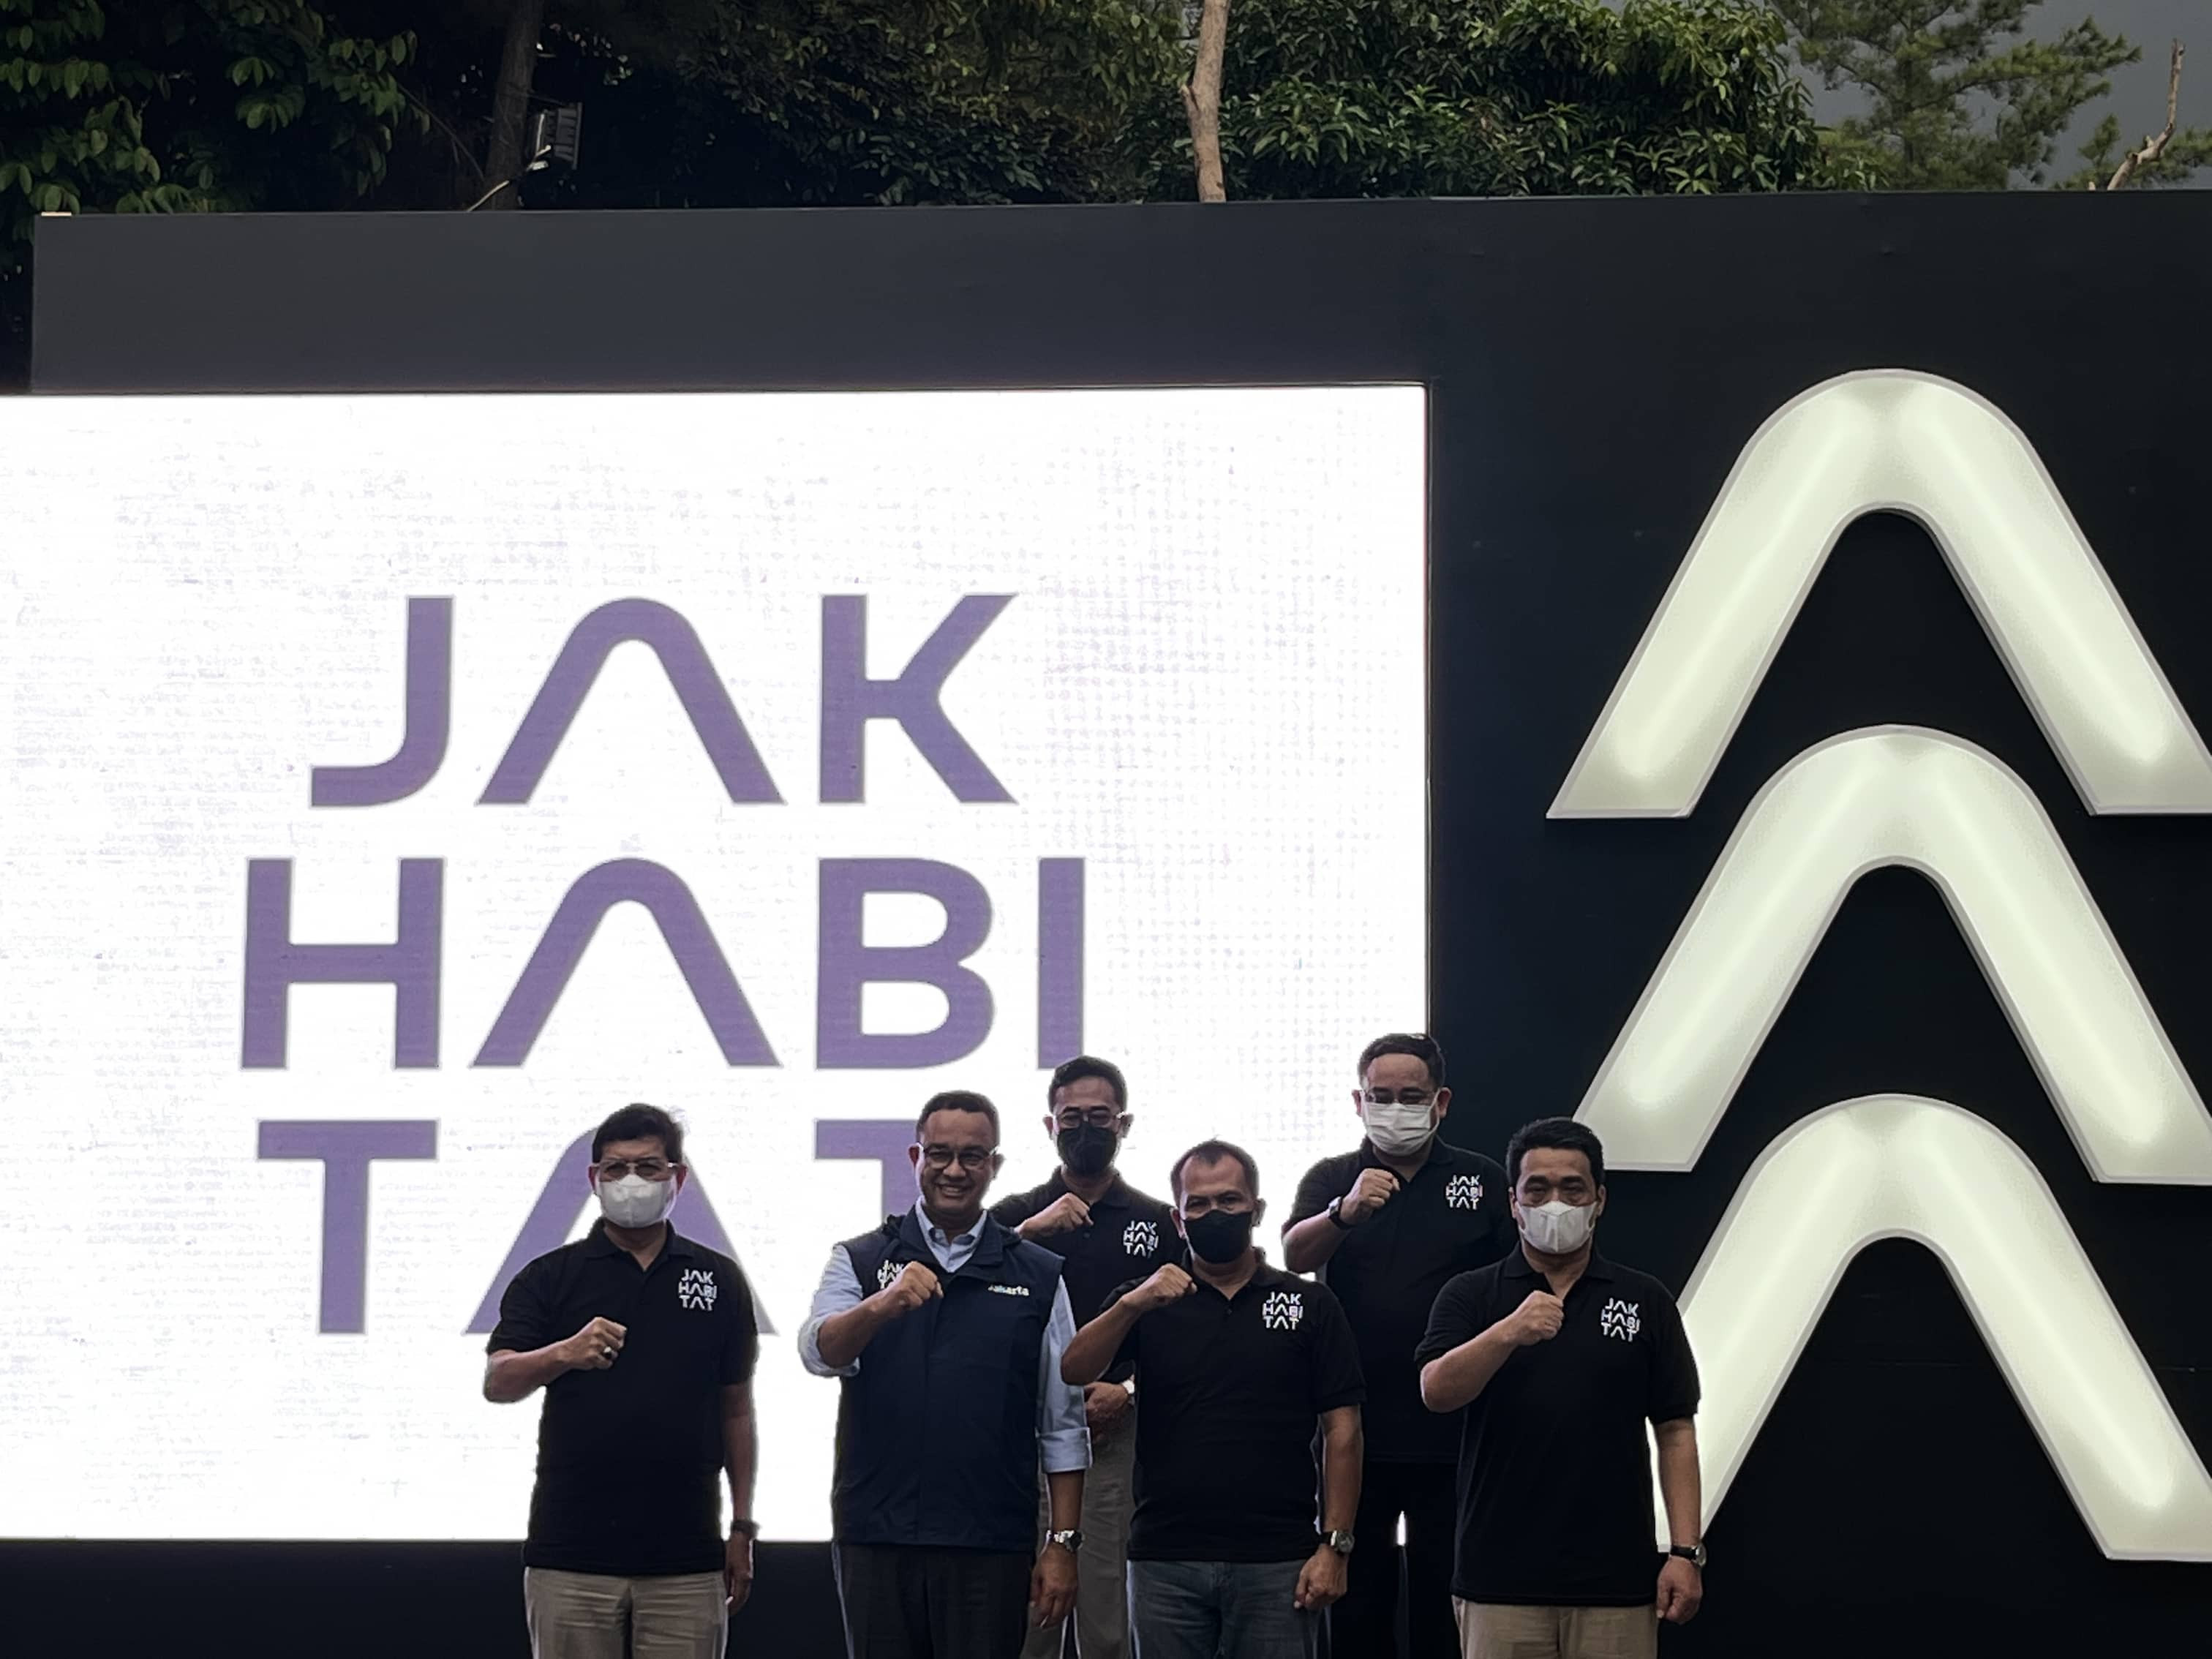 Anies Meluncurkan Jakhabitat, Layanan Integrasi Hunian Layak di Jakarta - JPNN.com